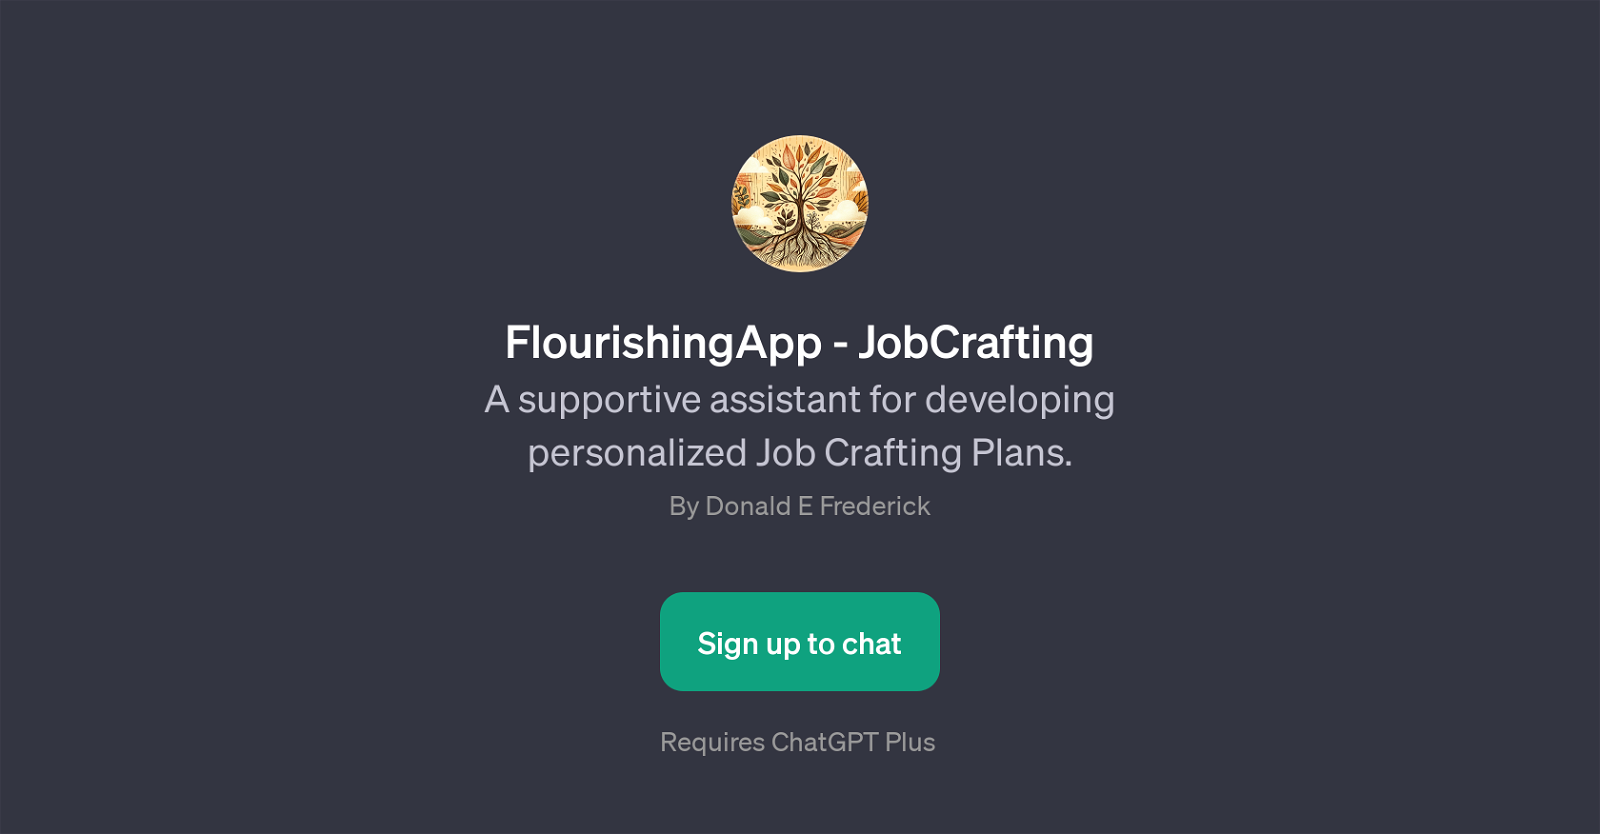 FlourishingApp - JobCrafting website